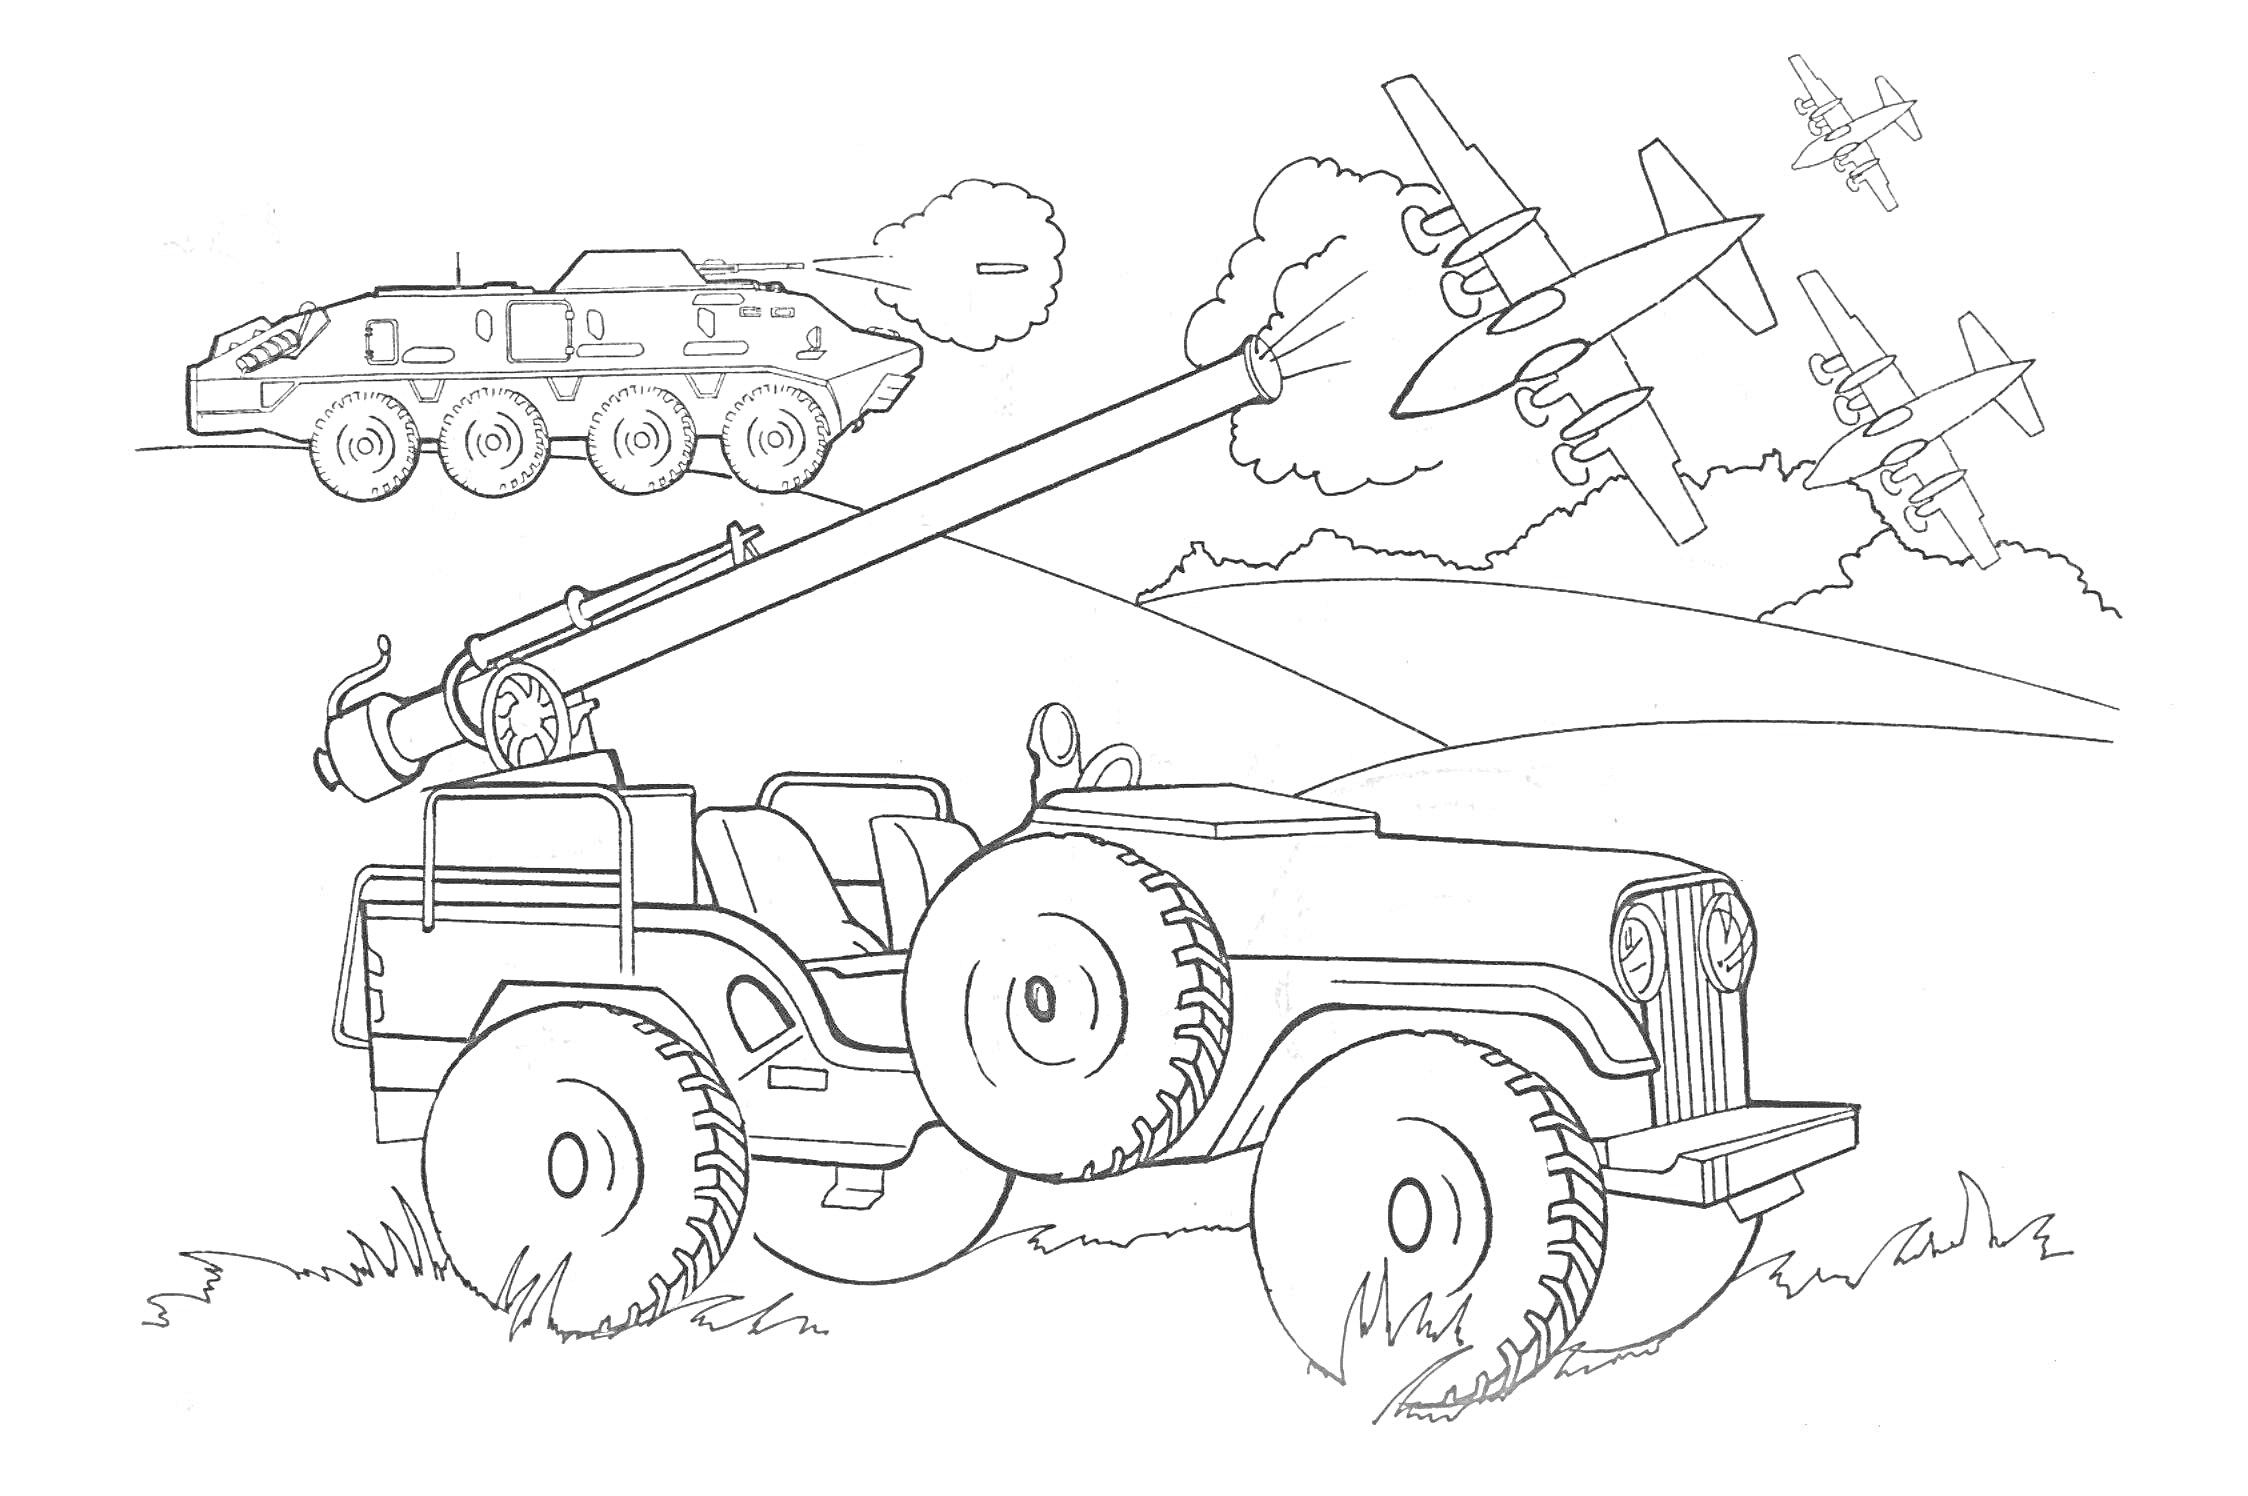 Военная техника с грузовиком с пушкой, бронетранспортёром и самолётами.